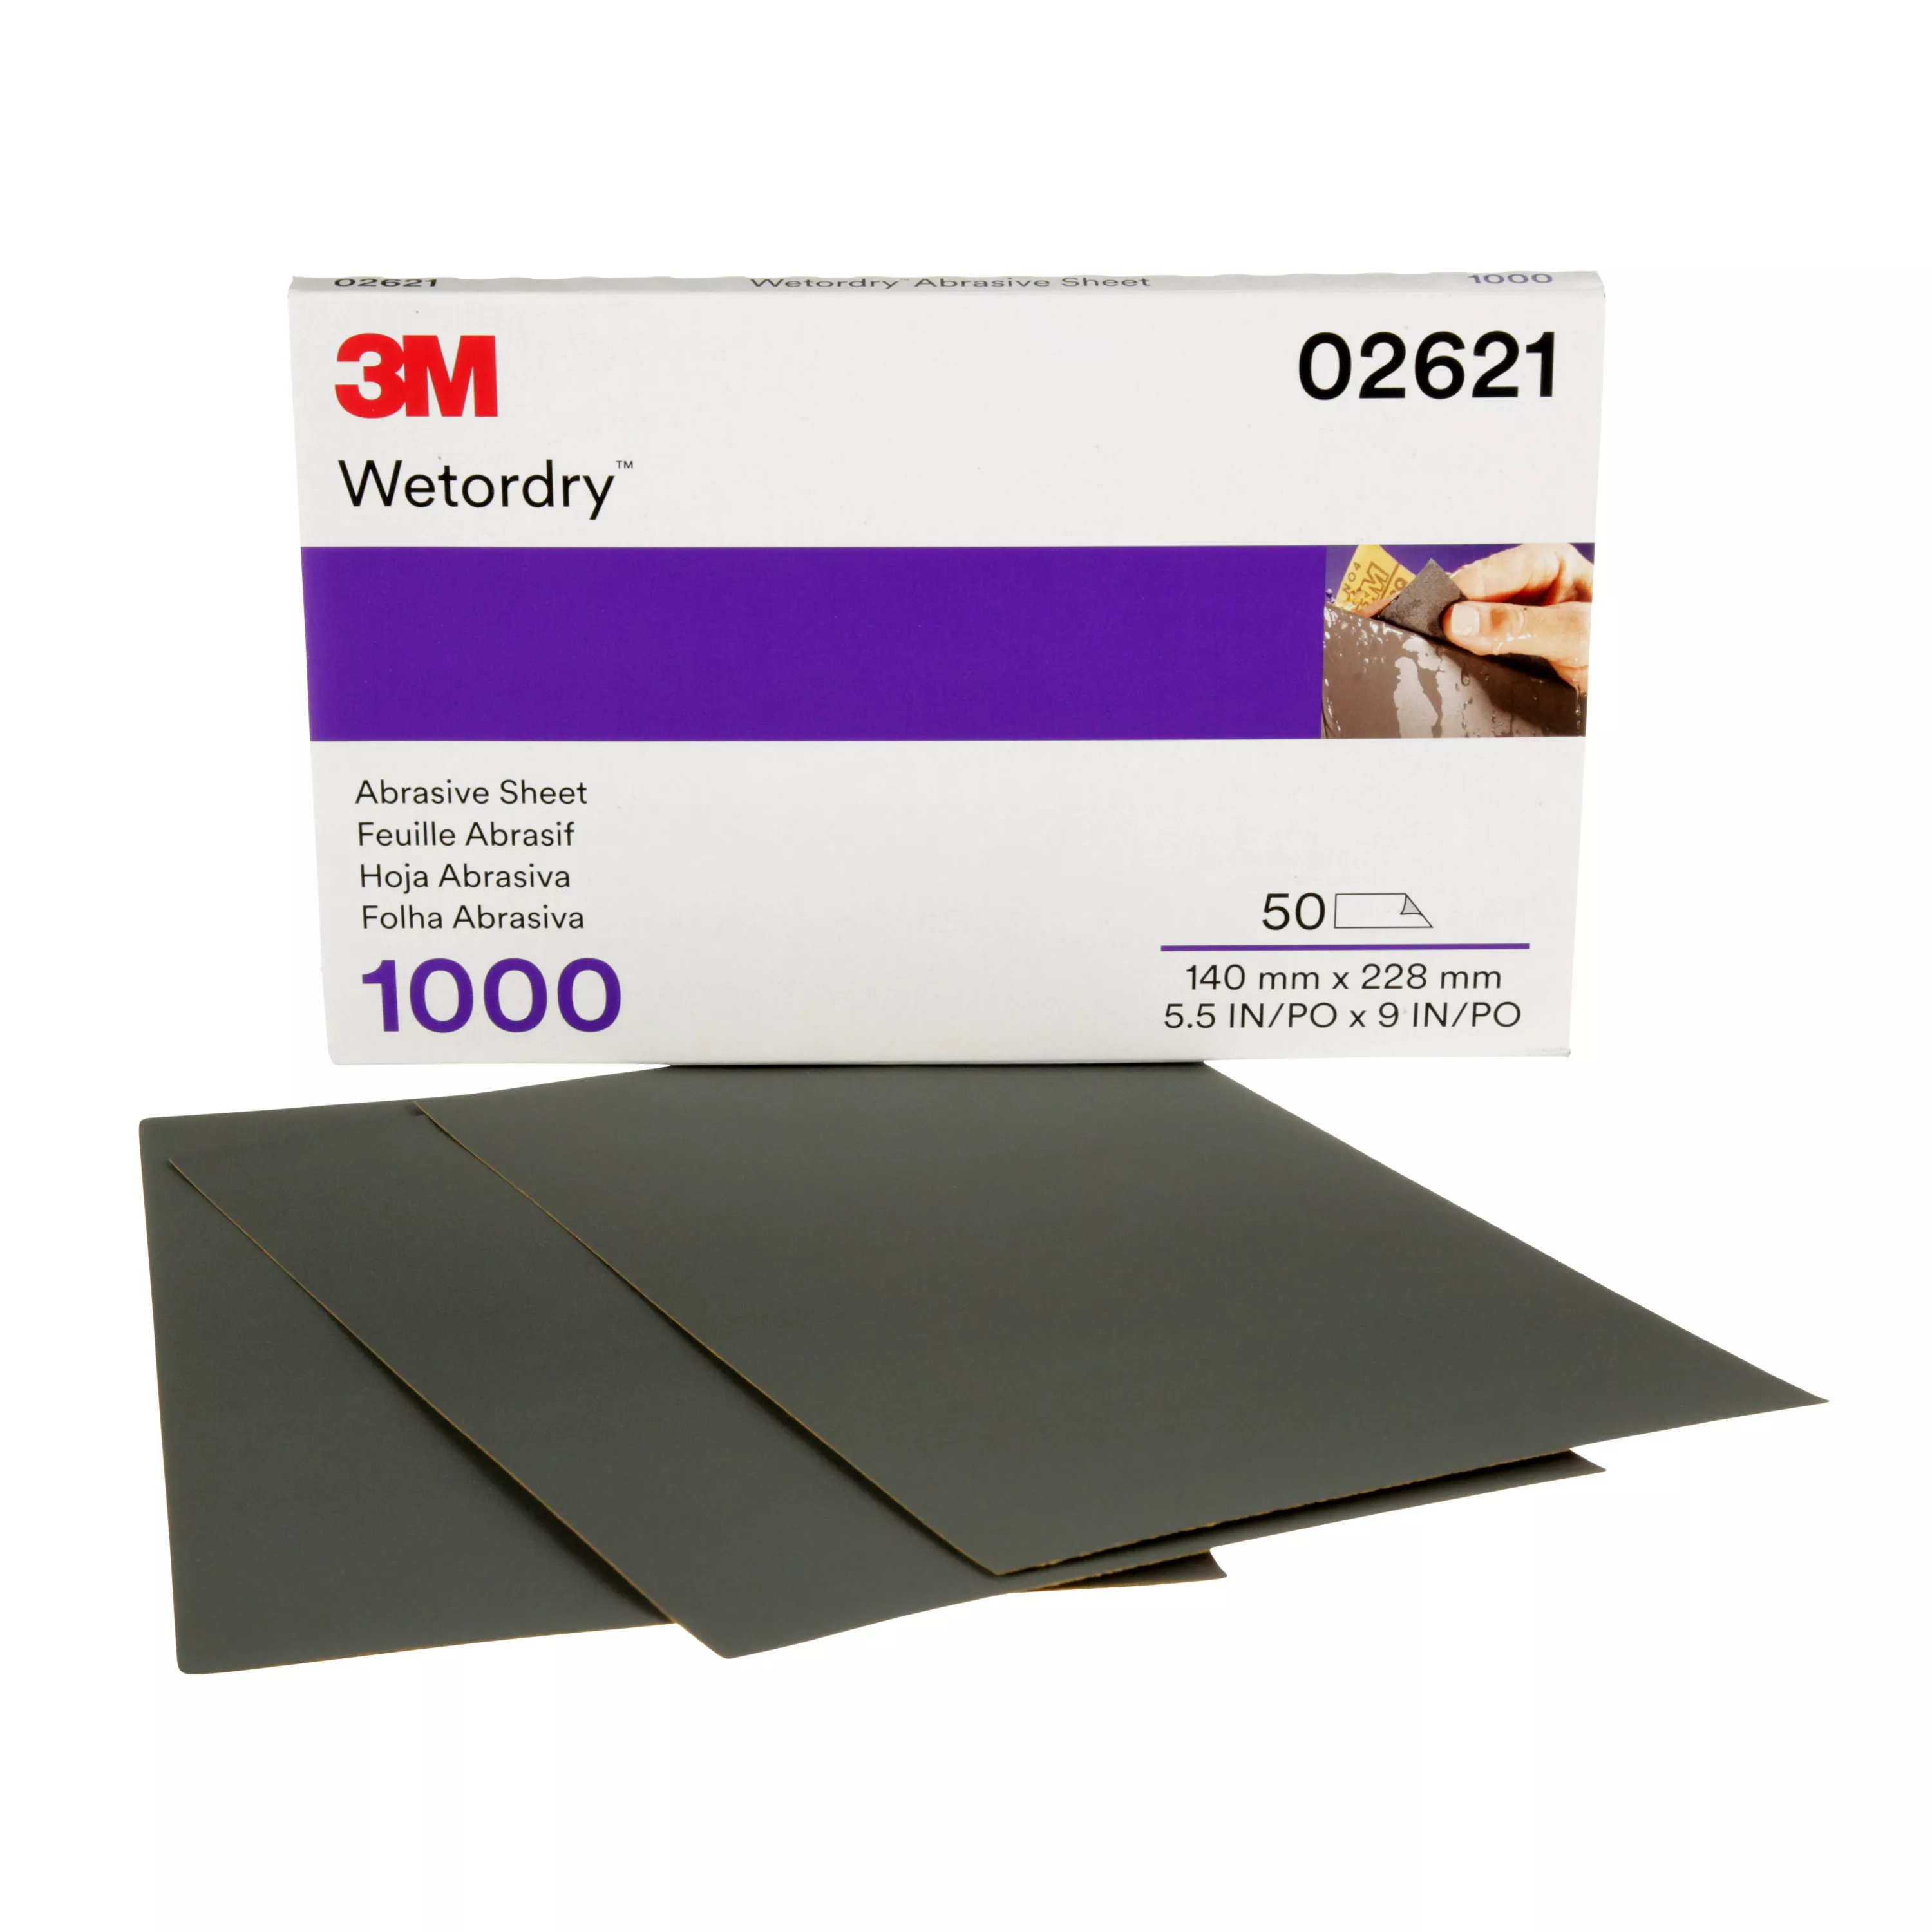 3M™ Wetordry™ Abrasive Sheet 434Q, 02621, 1000, 5 1/2 in x 9 in, 50
sheets per carton, 5 cartons per case